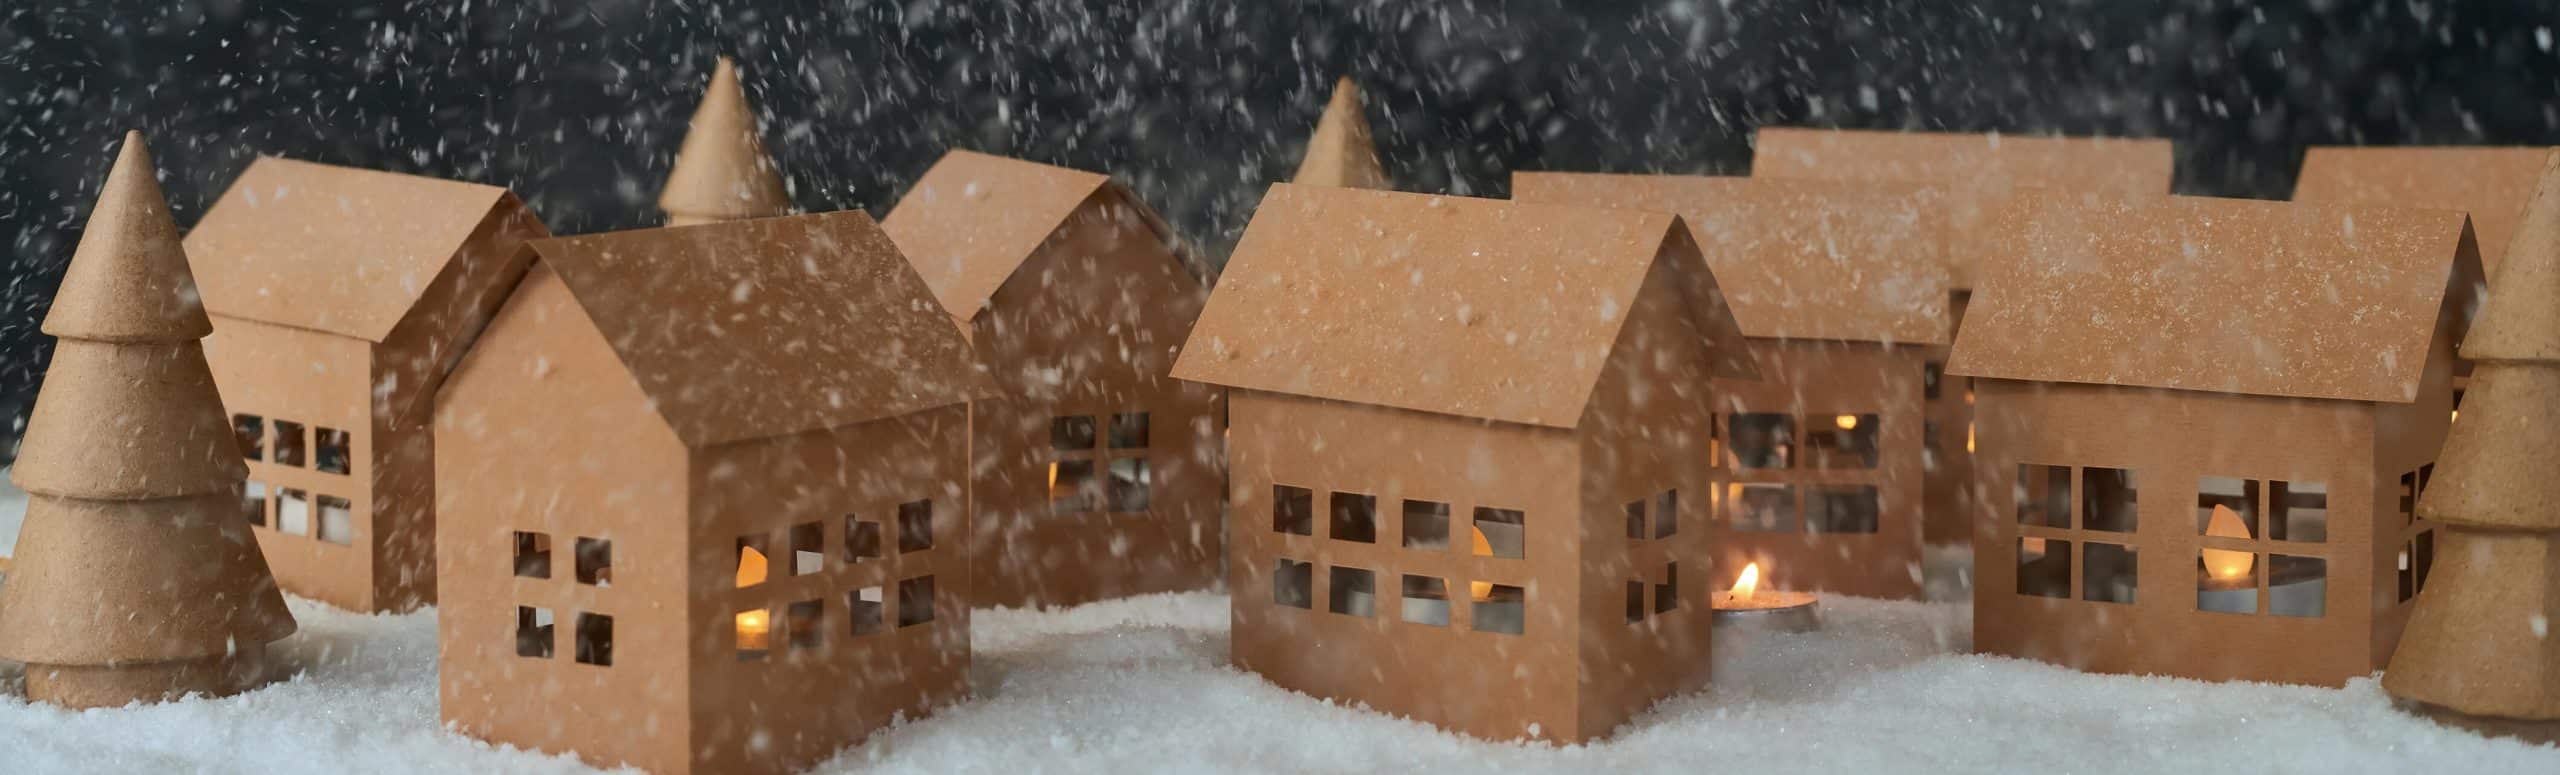 snow falling onto model homes.